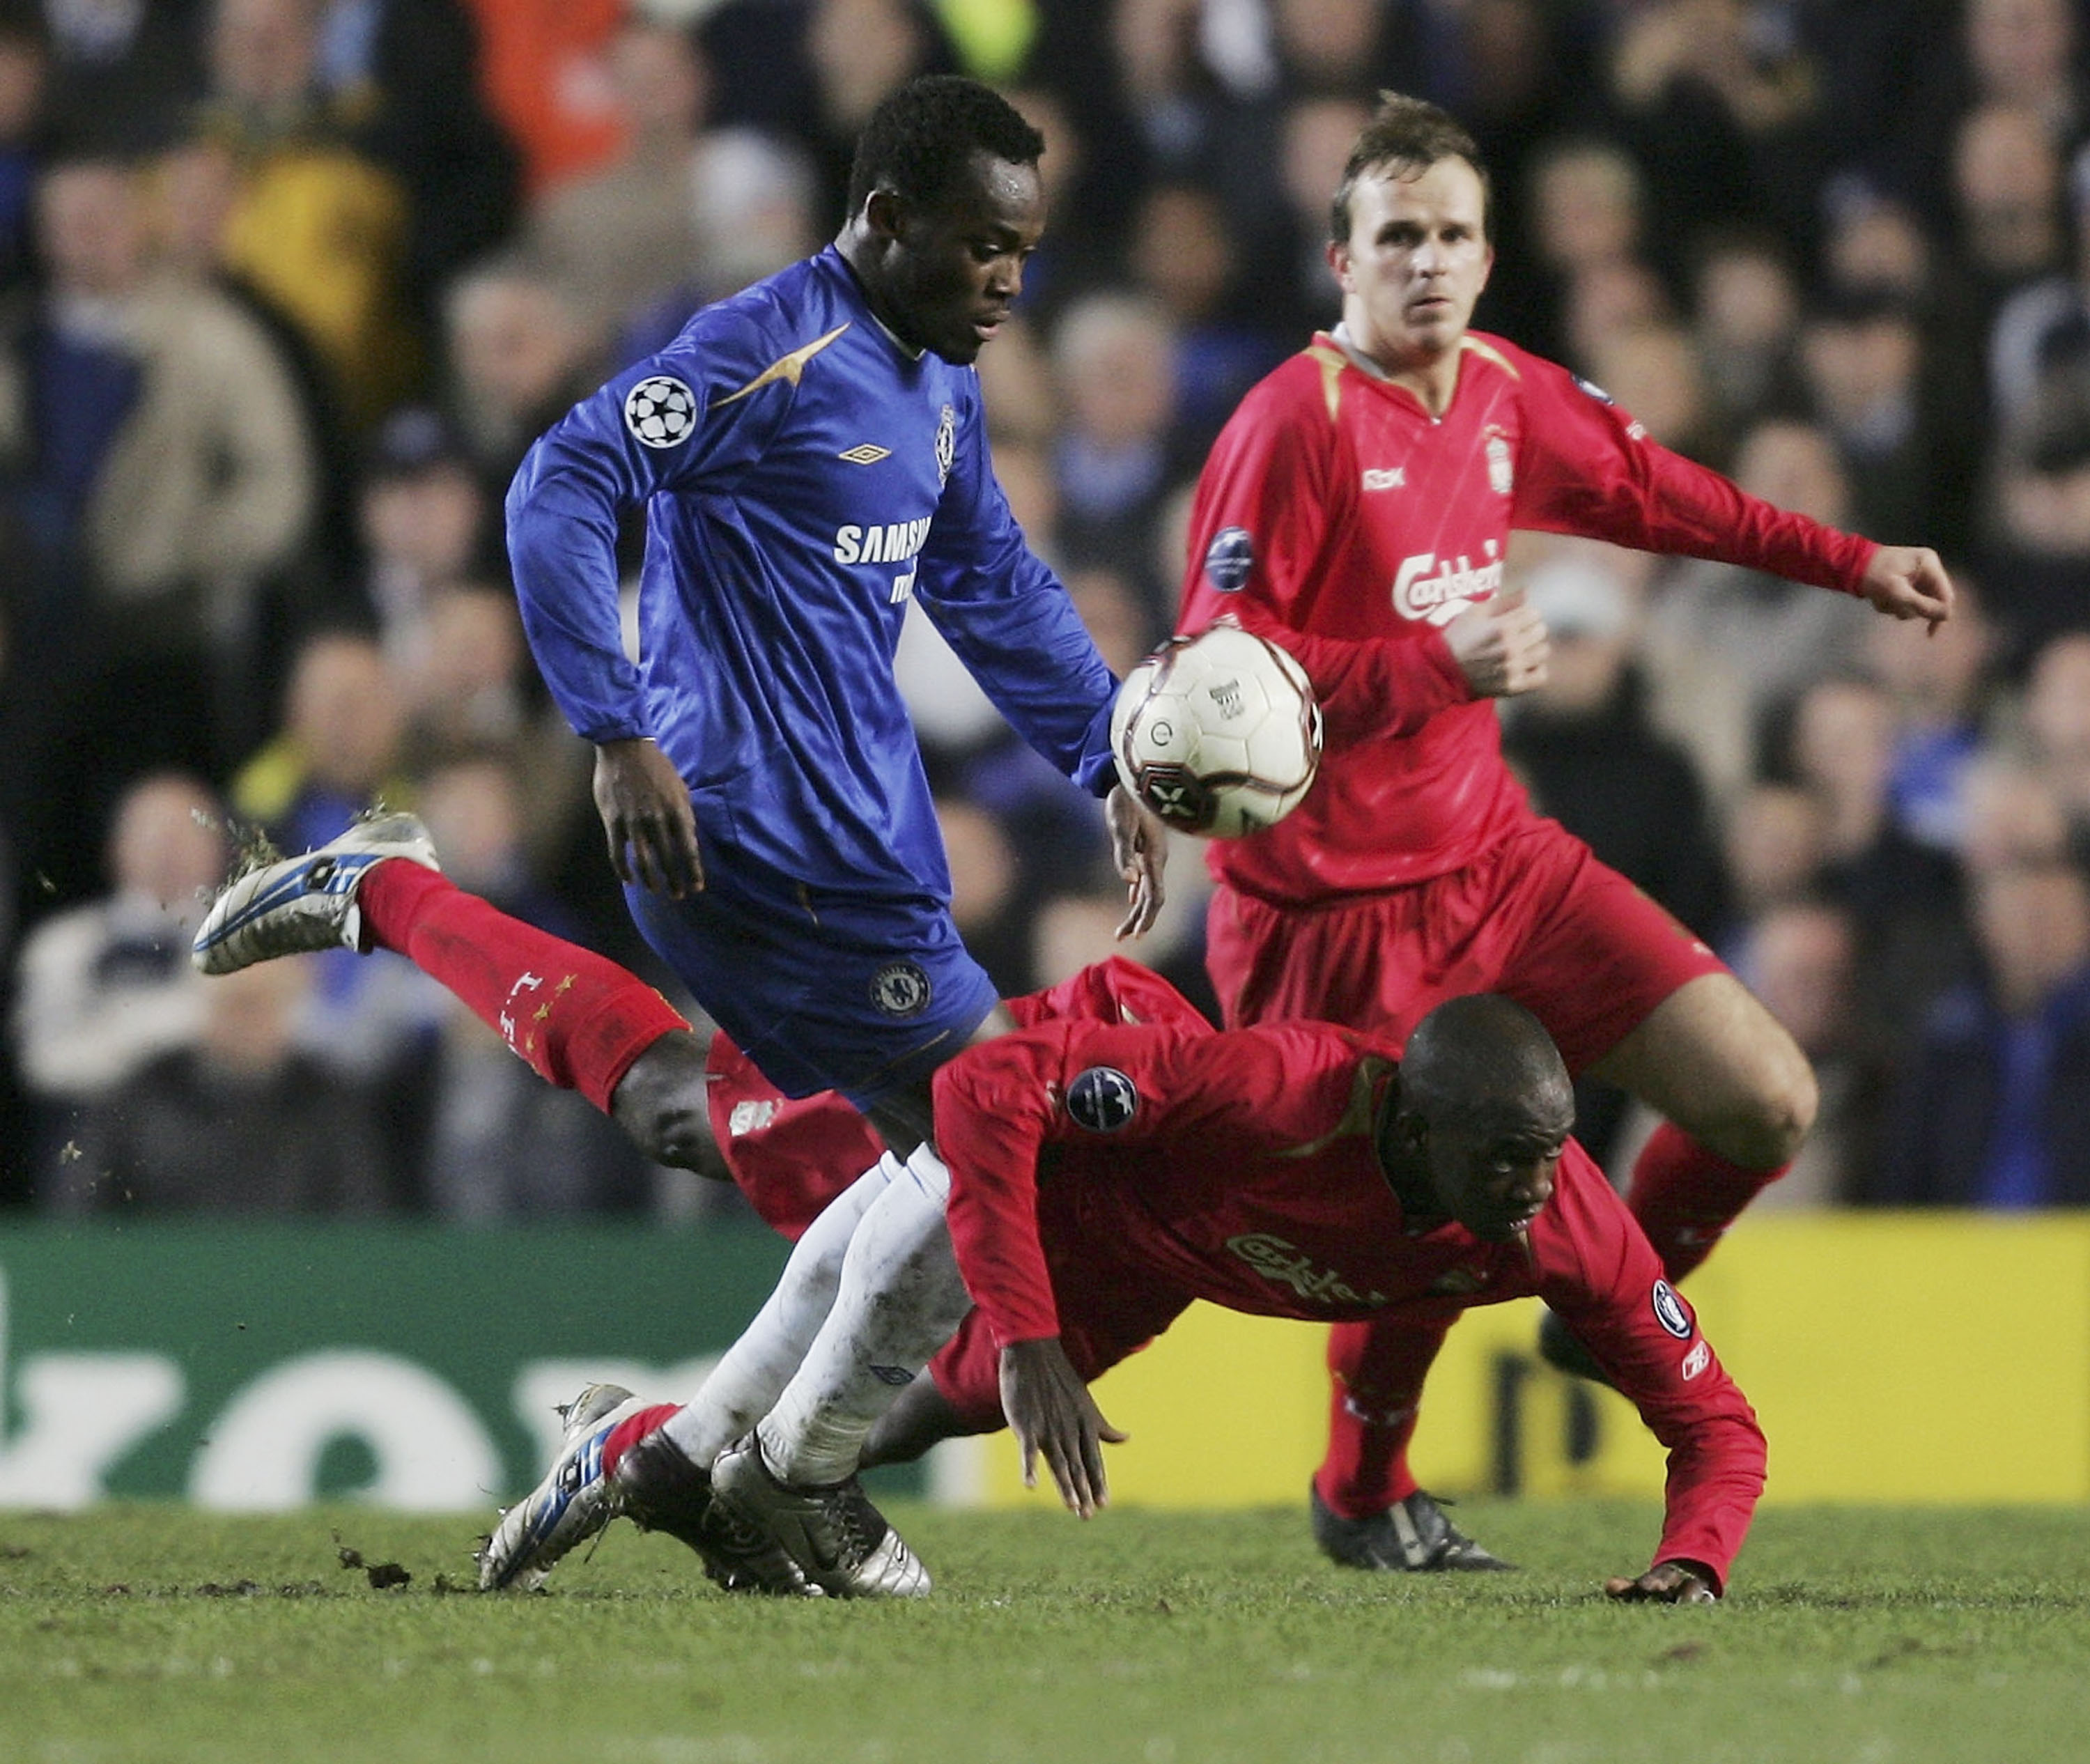 Manchester United vs Chelsea 2008. Manchester United vs Chelsea 2008 Final.